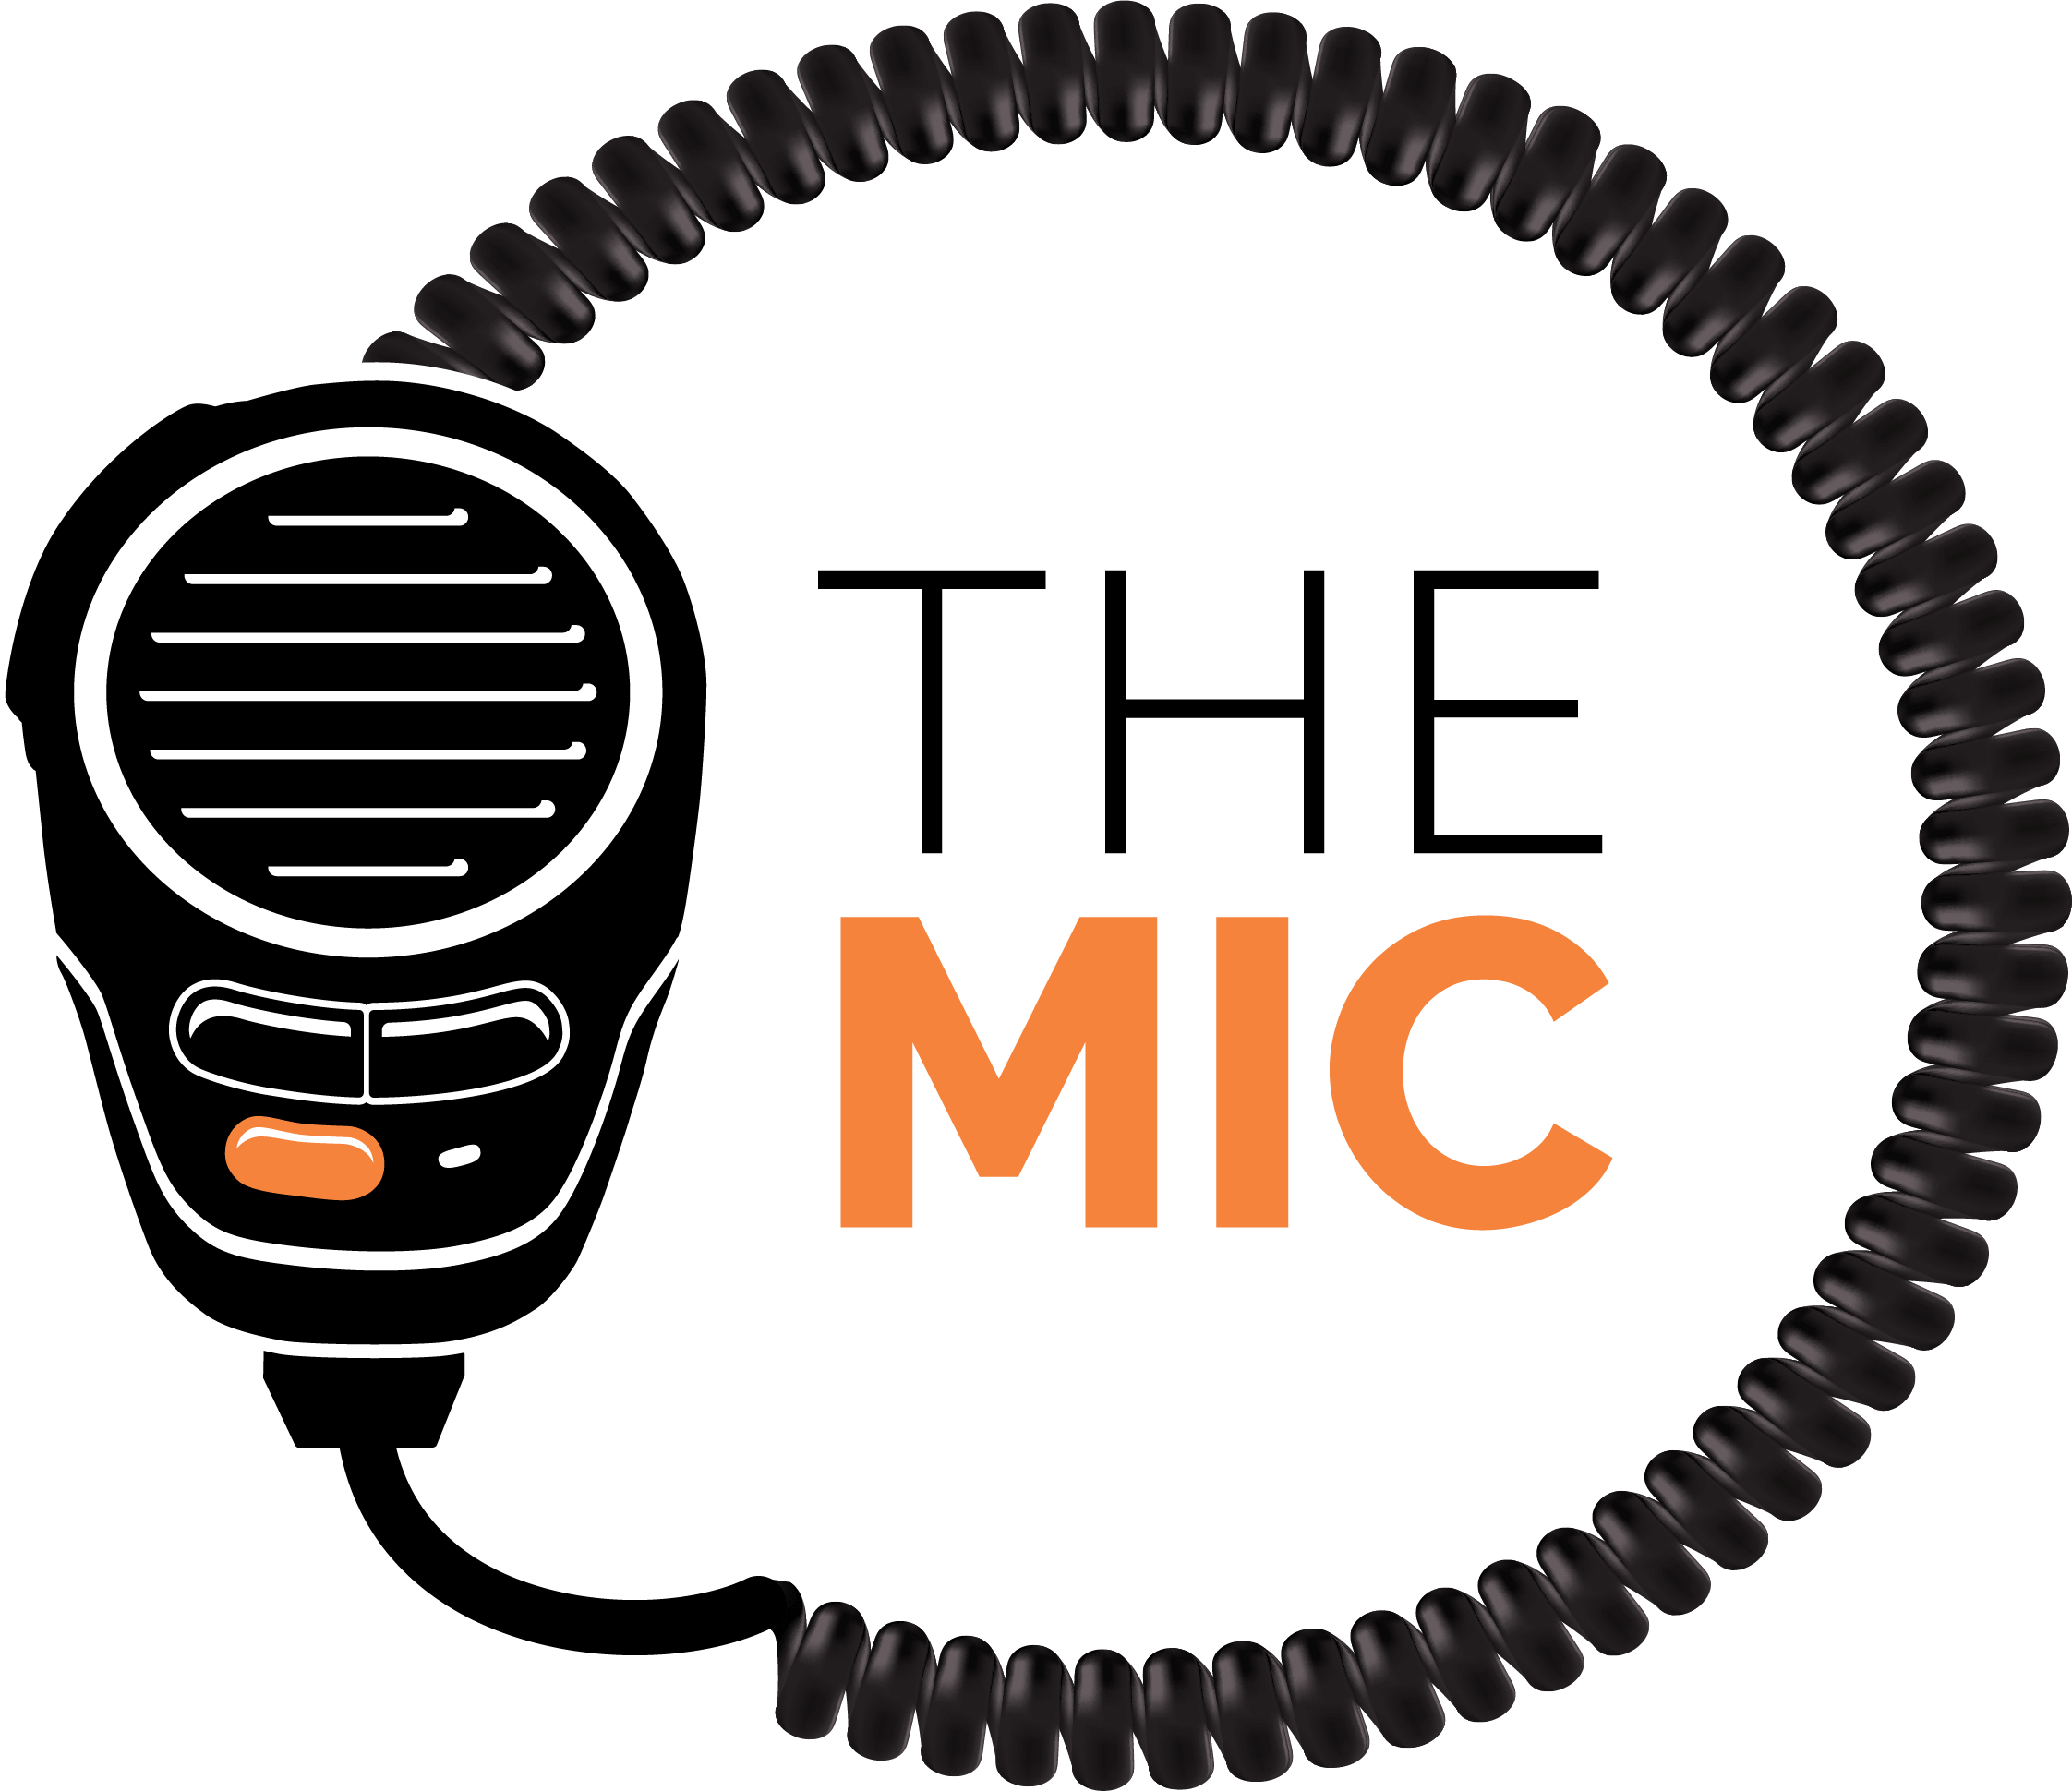 The Mic logo